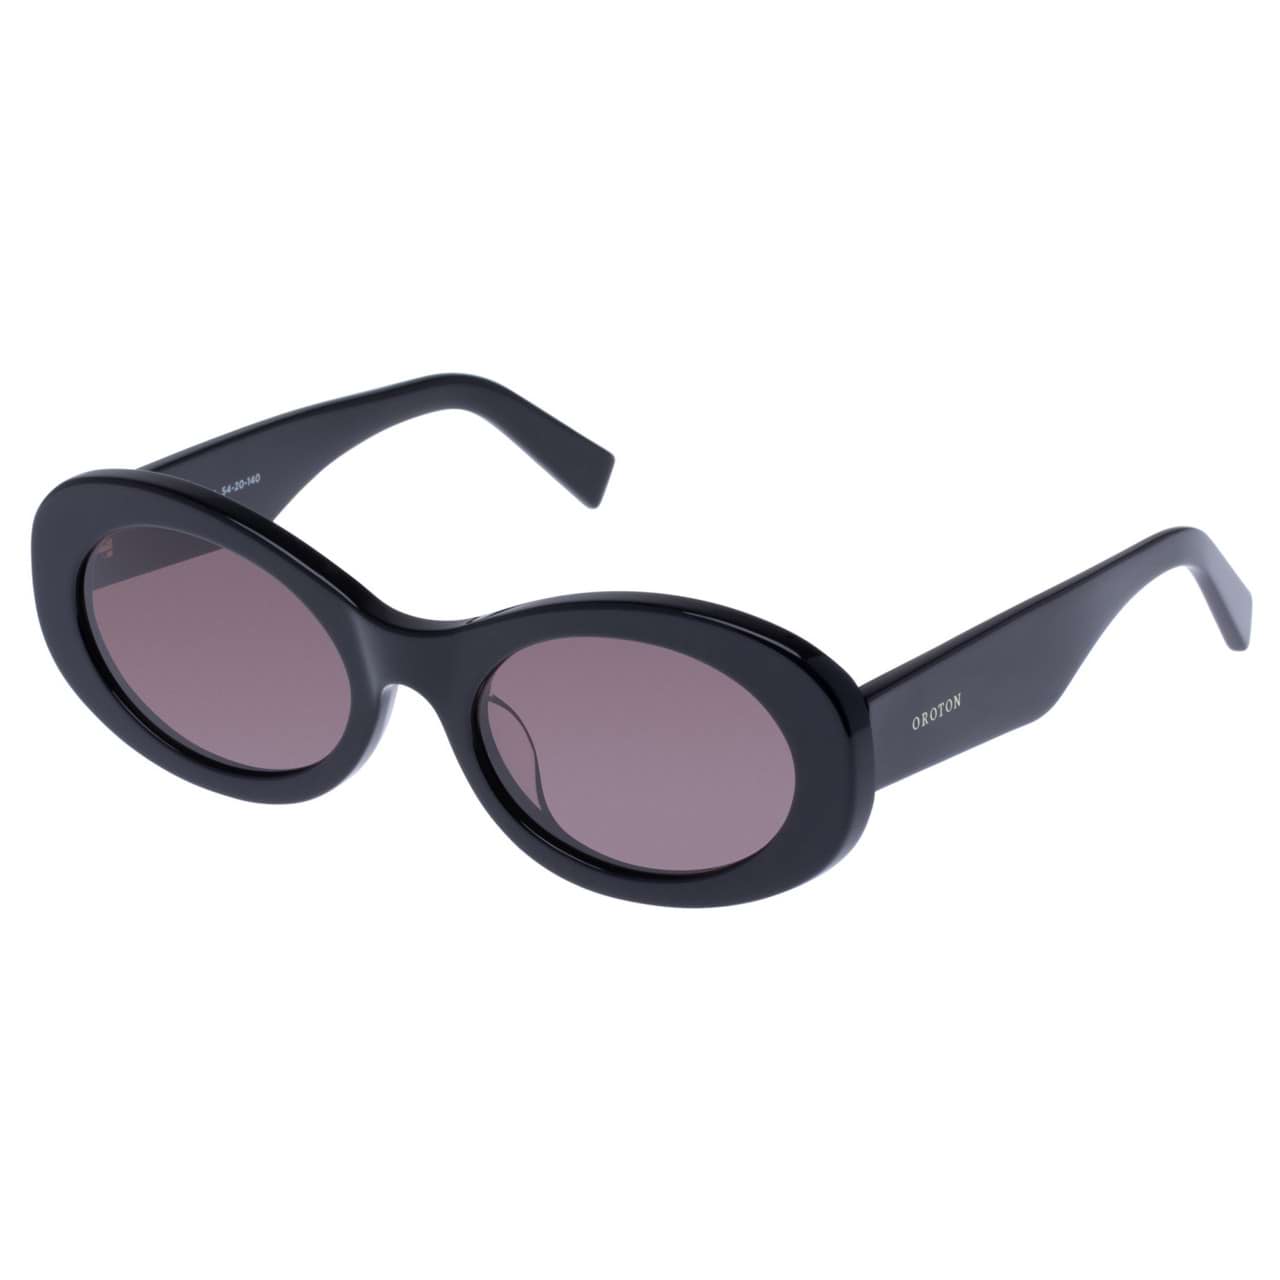 Daphne Sunglasses - Black | Oroton